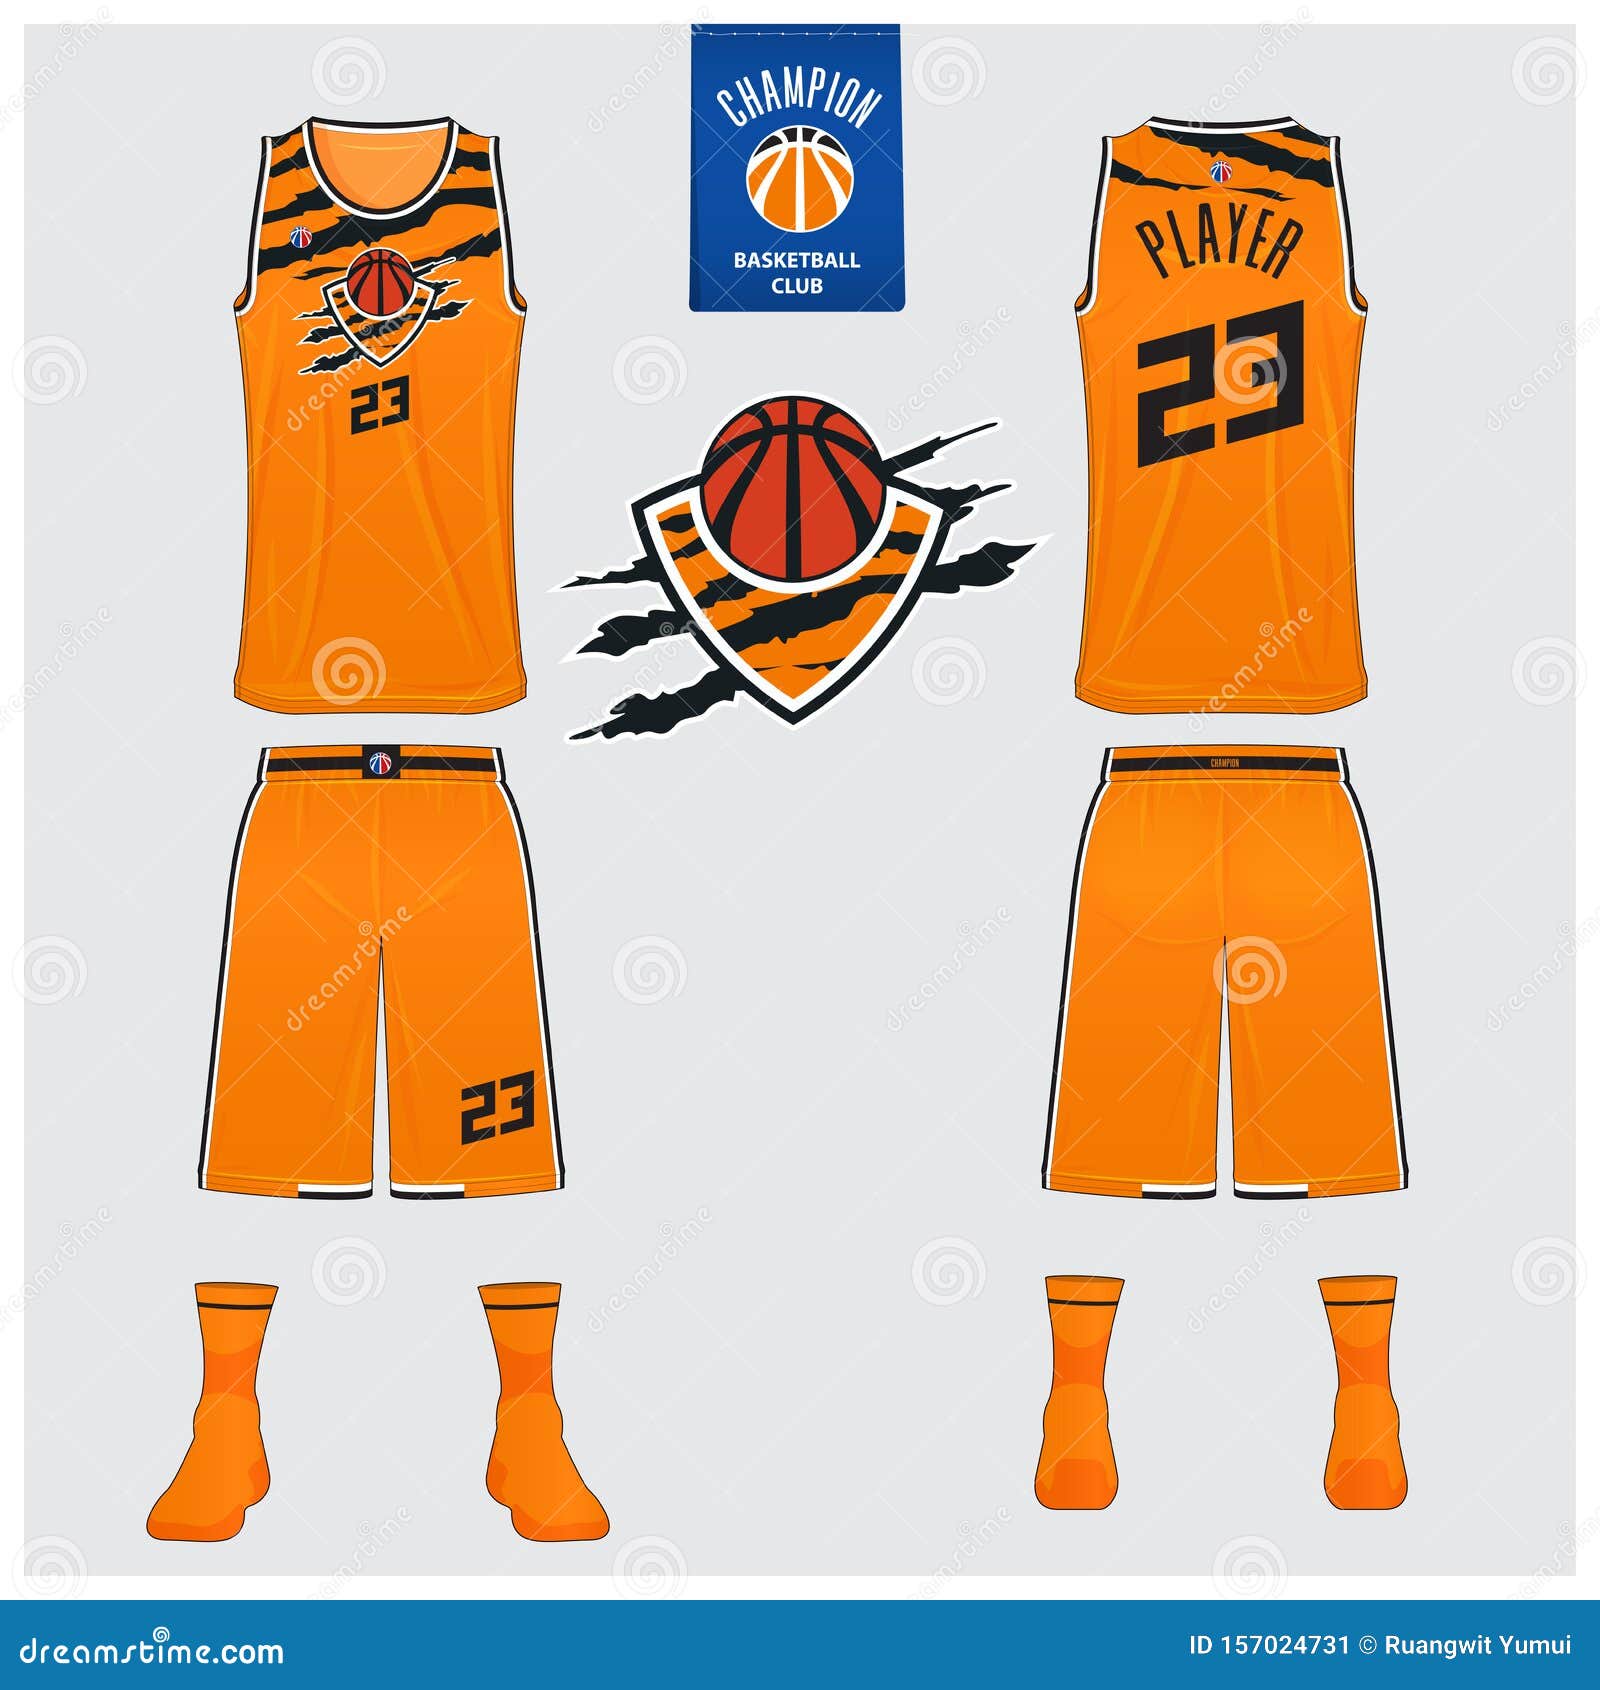 Download Basketball Uniform Mockup Template Design For Basketball ...